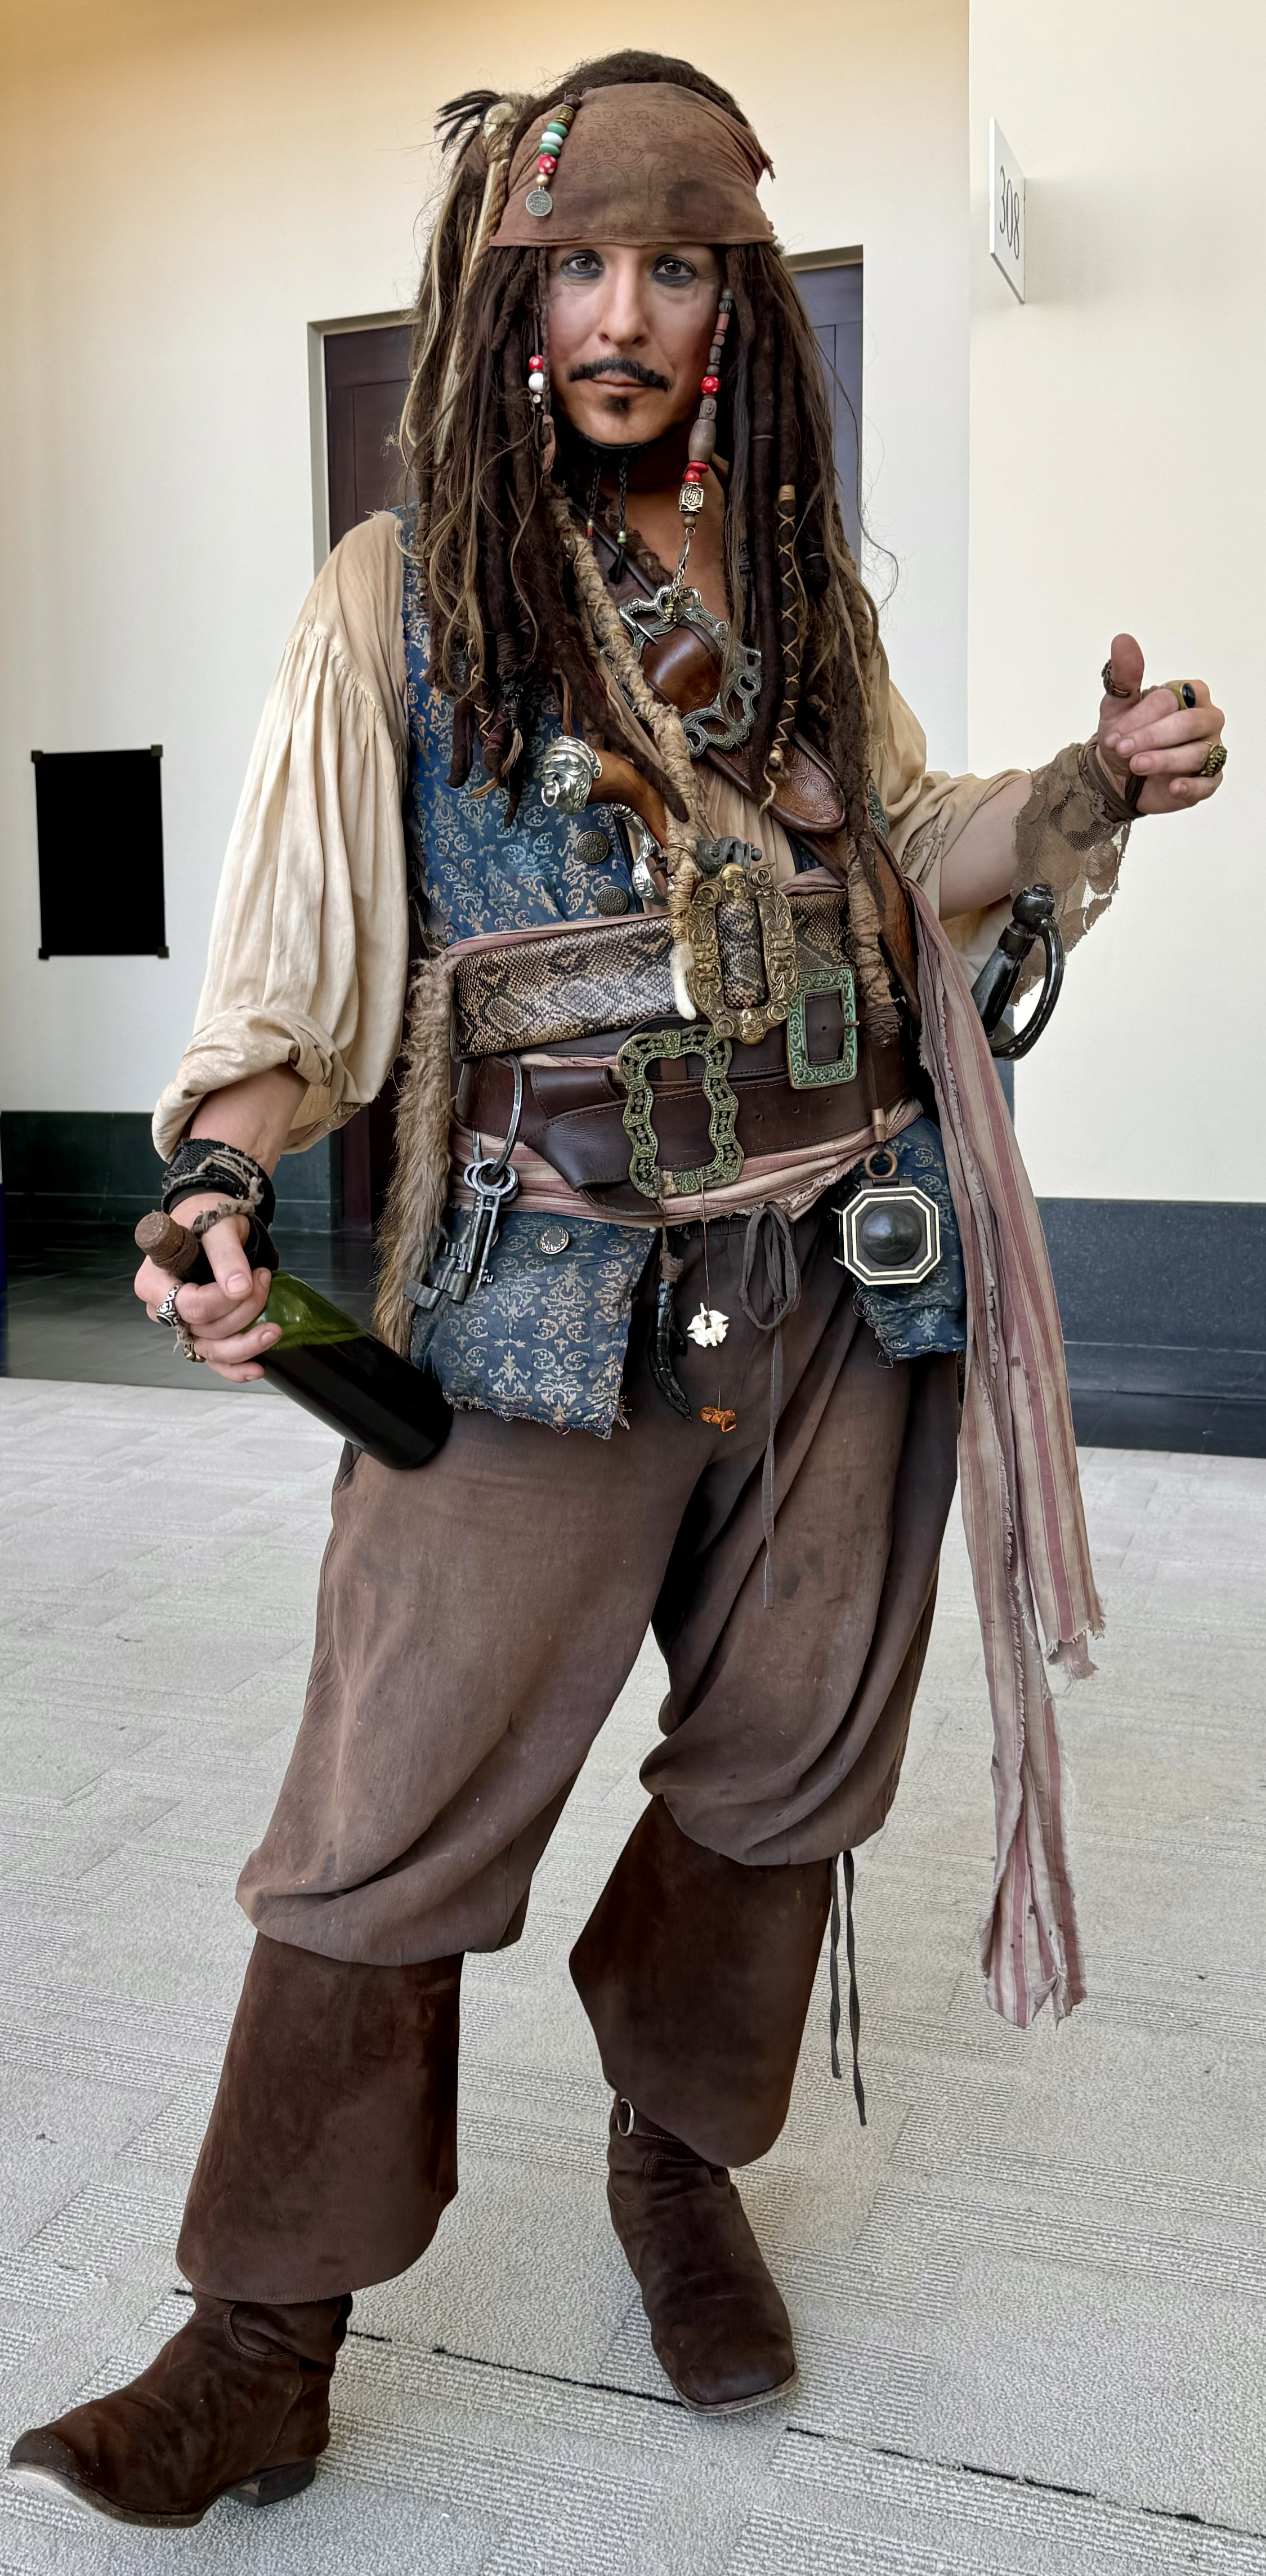 Jack Sparrow. 